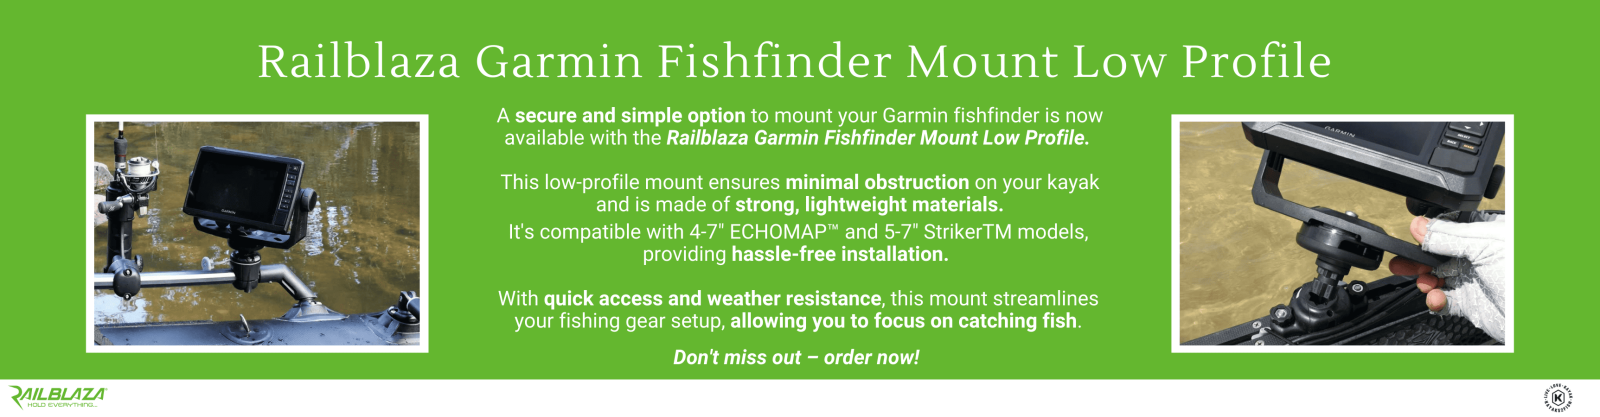 Railblaza Garmin Fishfinder Mount Low Profile